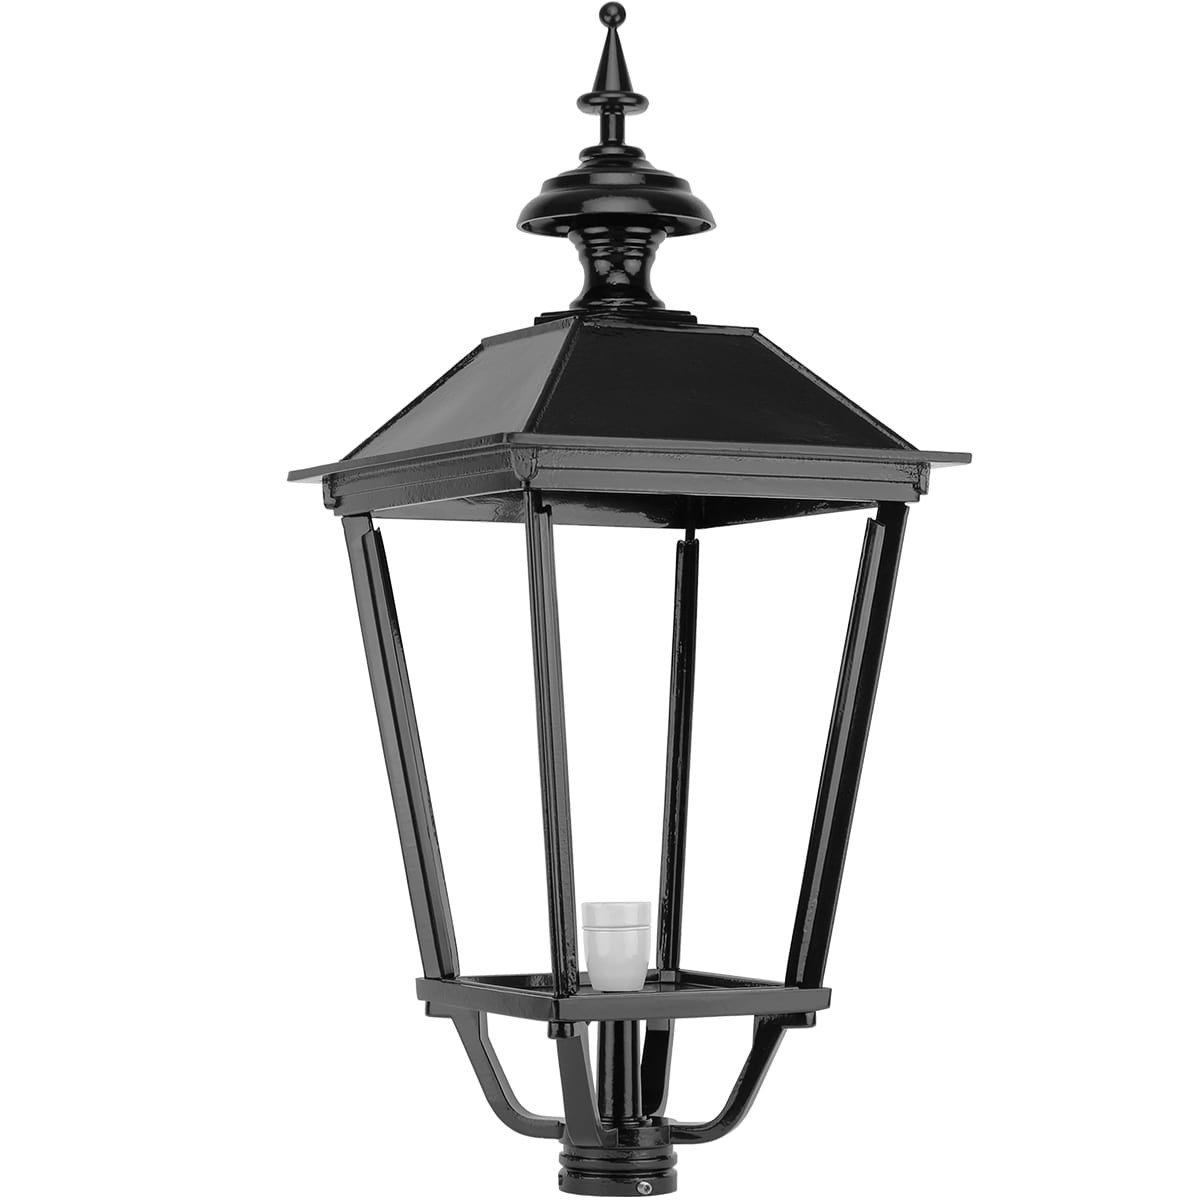 Loose lamp shade K01 - 85 cm